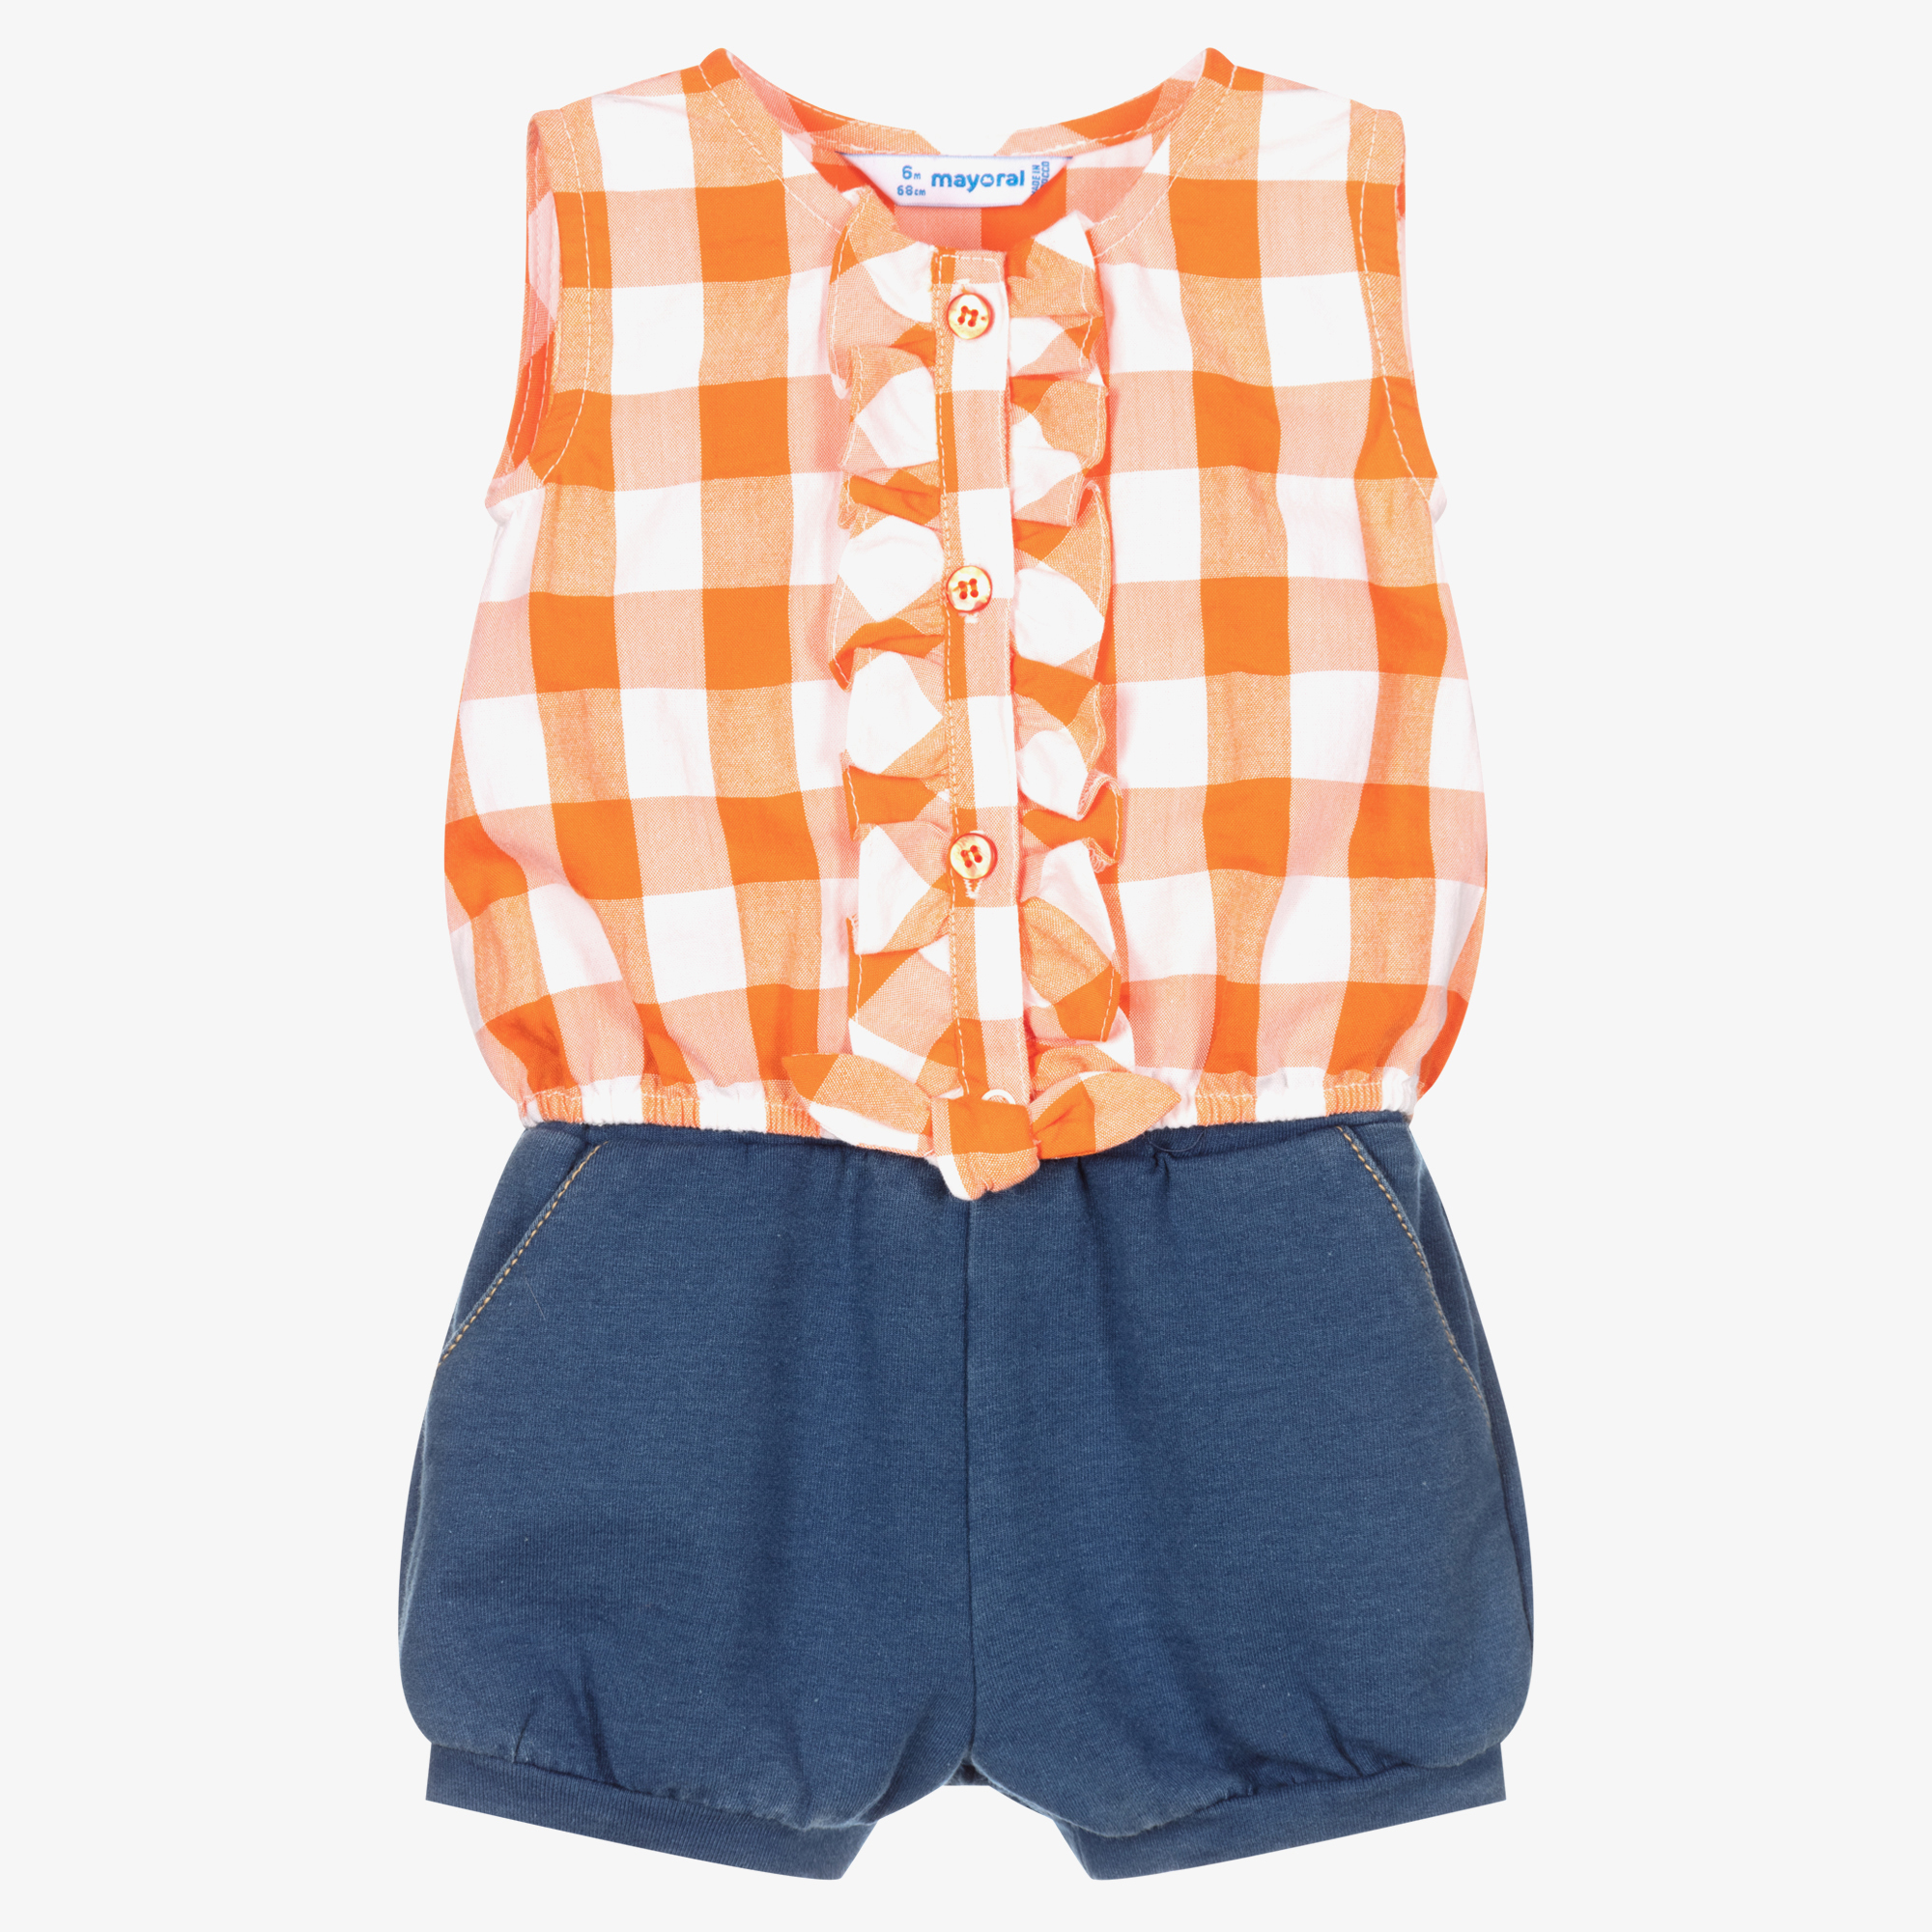 Robar a Tener cuidado Risa Mayoral - Girls Orange & Blue Shorts Set | Childrensalon Outlet